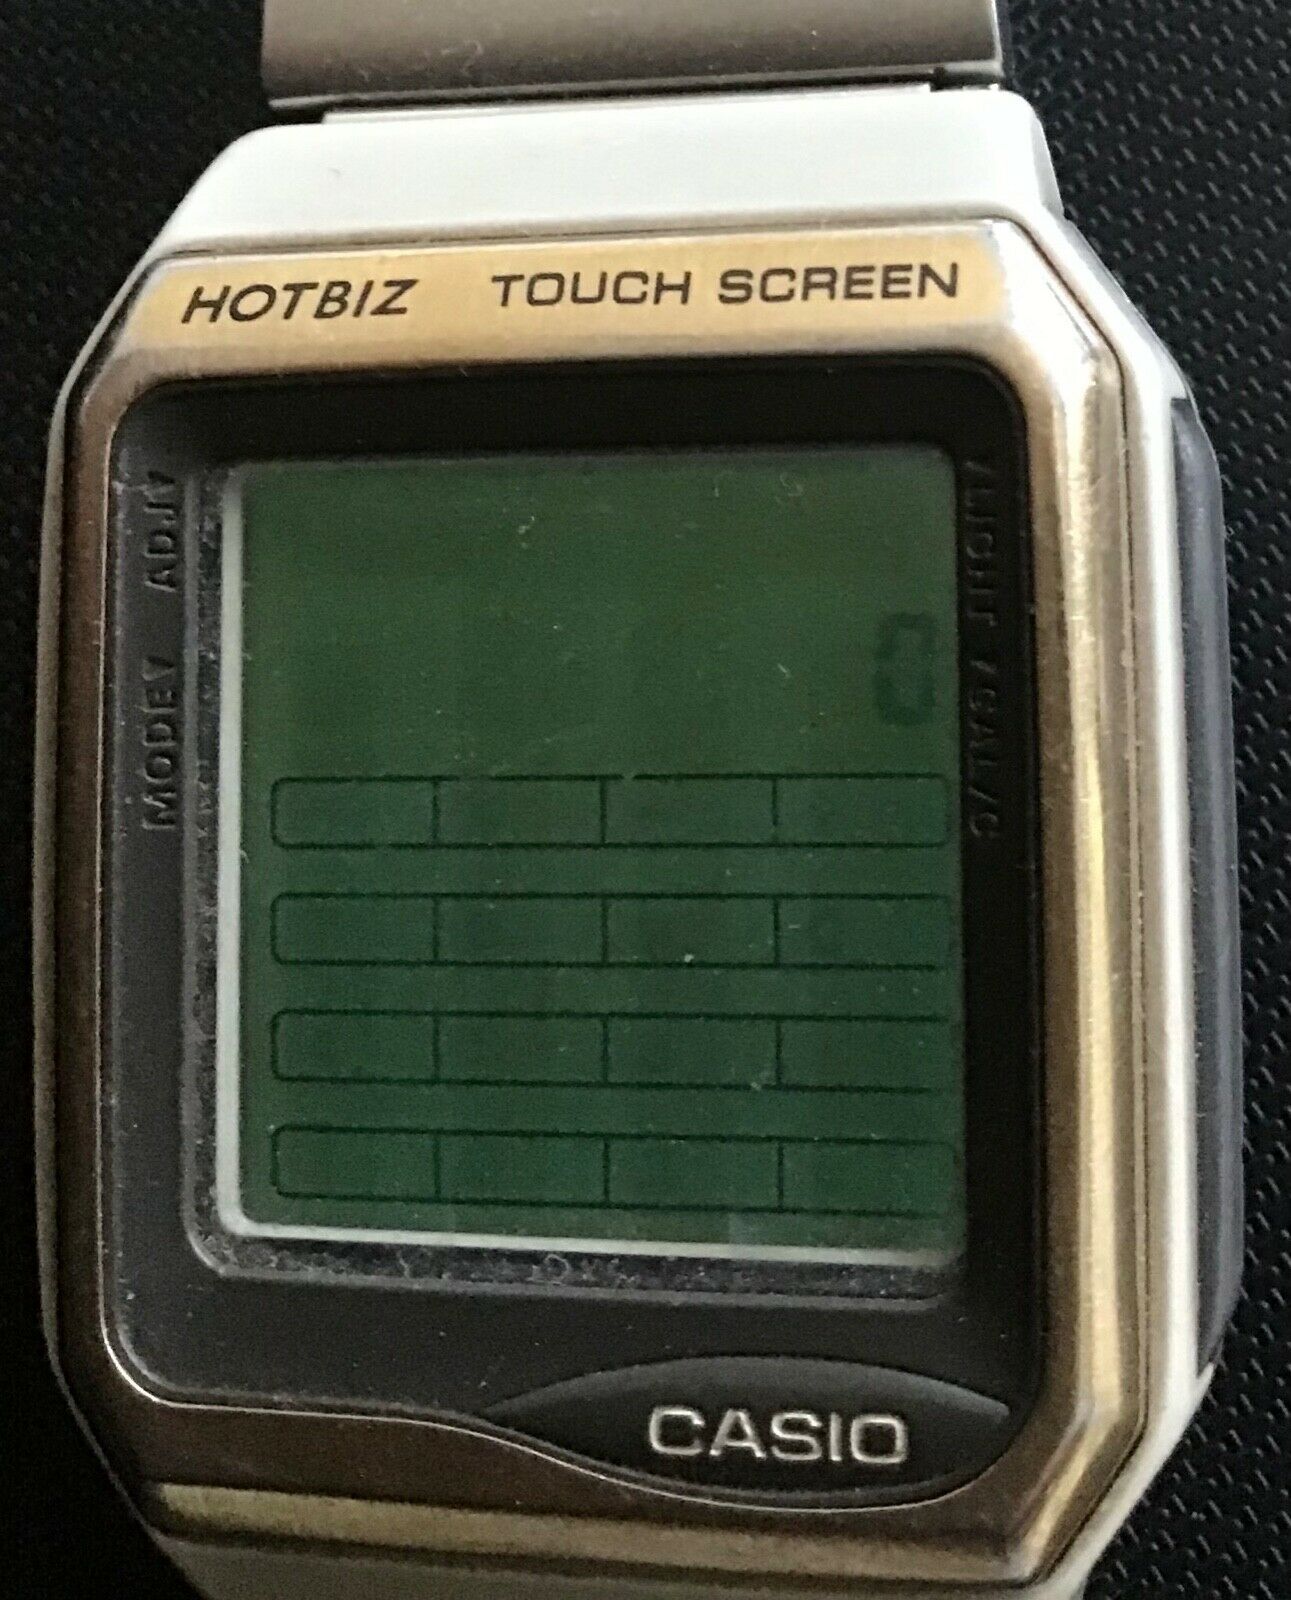 Casio Hotbiz VDB-3100 touchscreen watch | WatchCharts